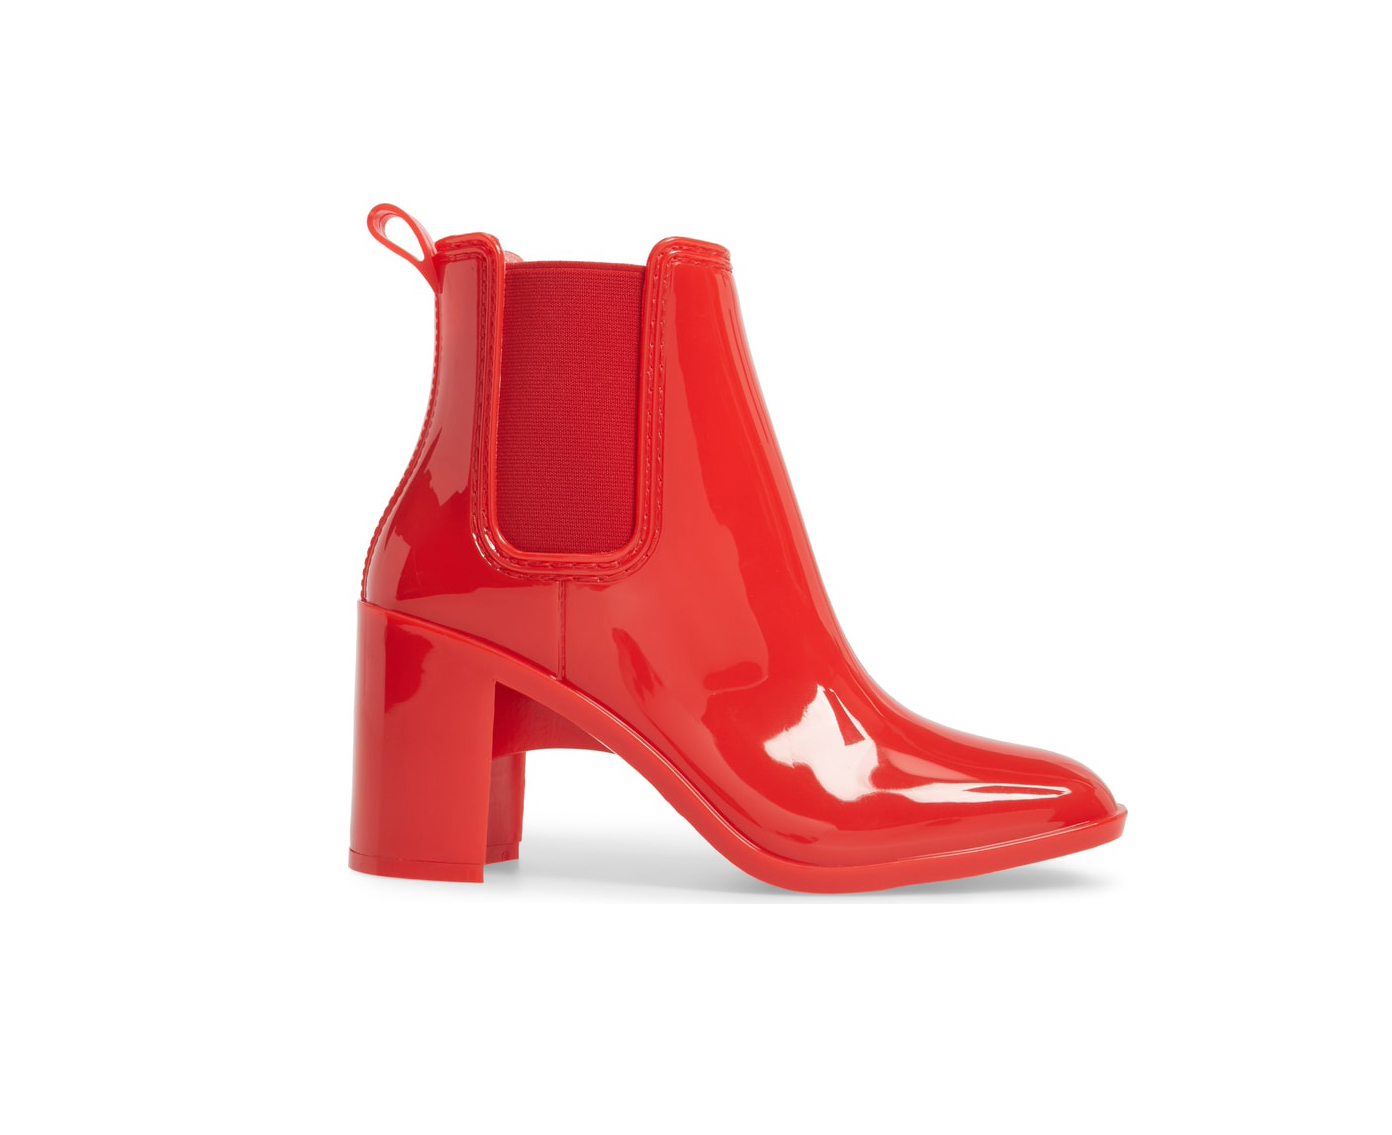 Make a Stylish Splash With These Jeffrey Campbell Rain Boots